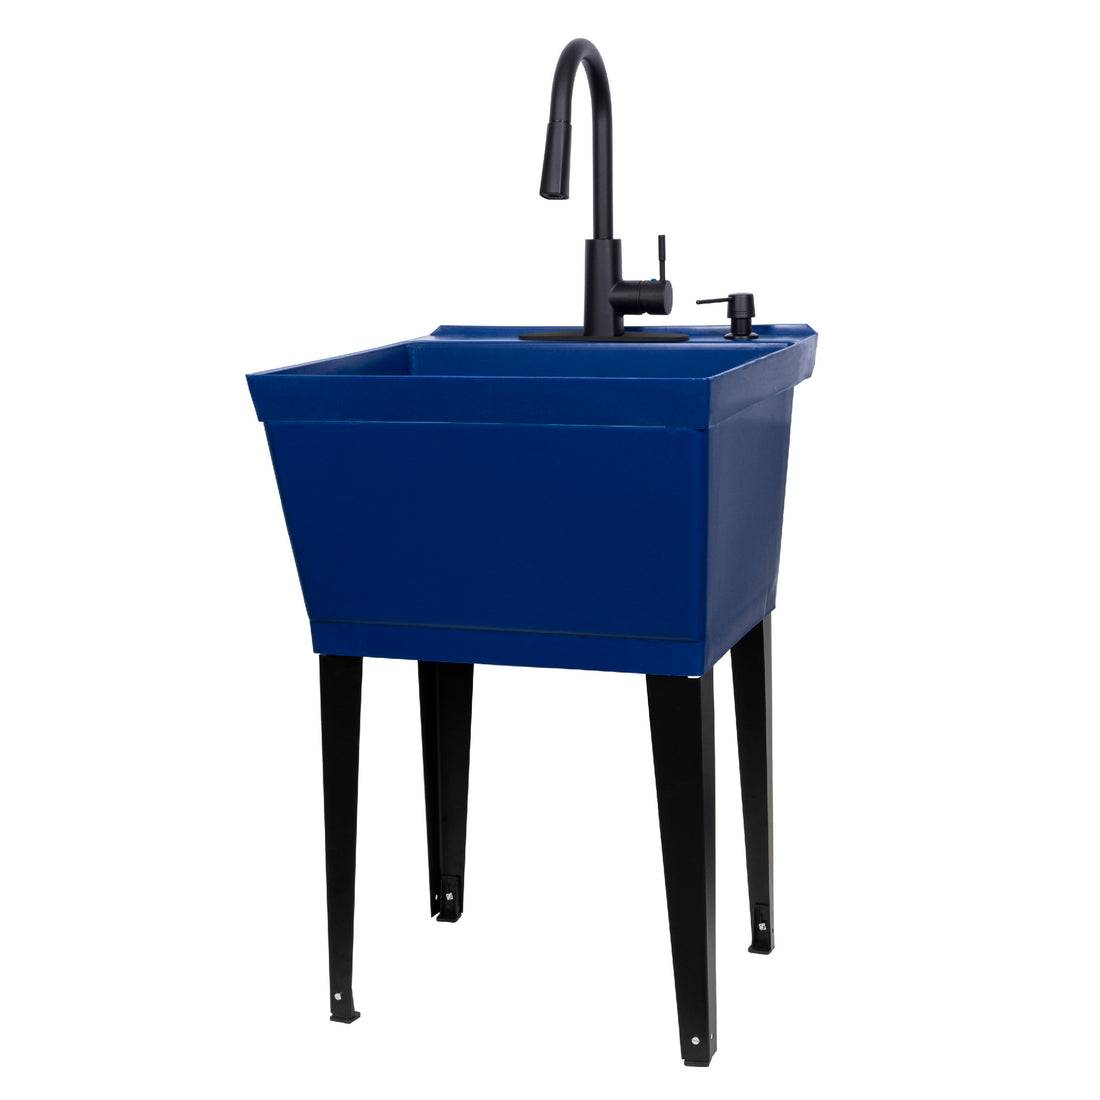 Tehila Standard Freestanding Blue Utility Sink with Black Finish High-Arc Pull-Down Faucet and Soap Dispenser - Utility sinks vanites Tehila